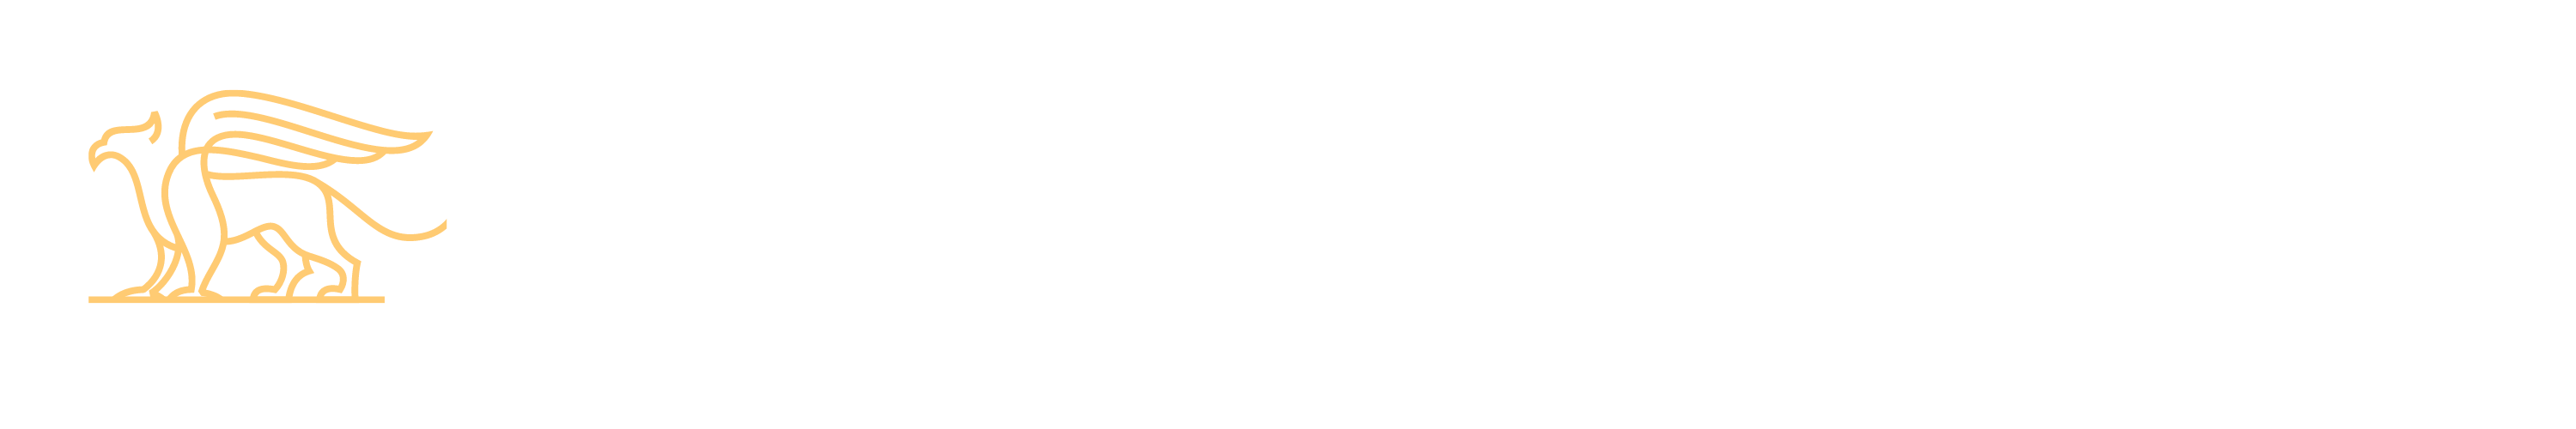 Credit Lawyer Ads